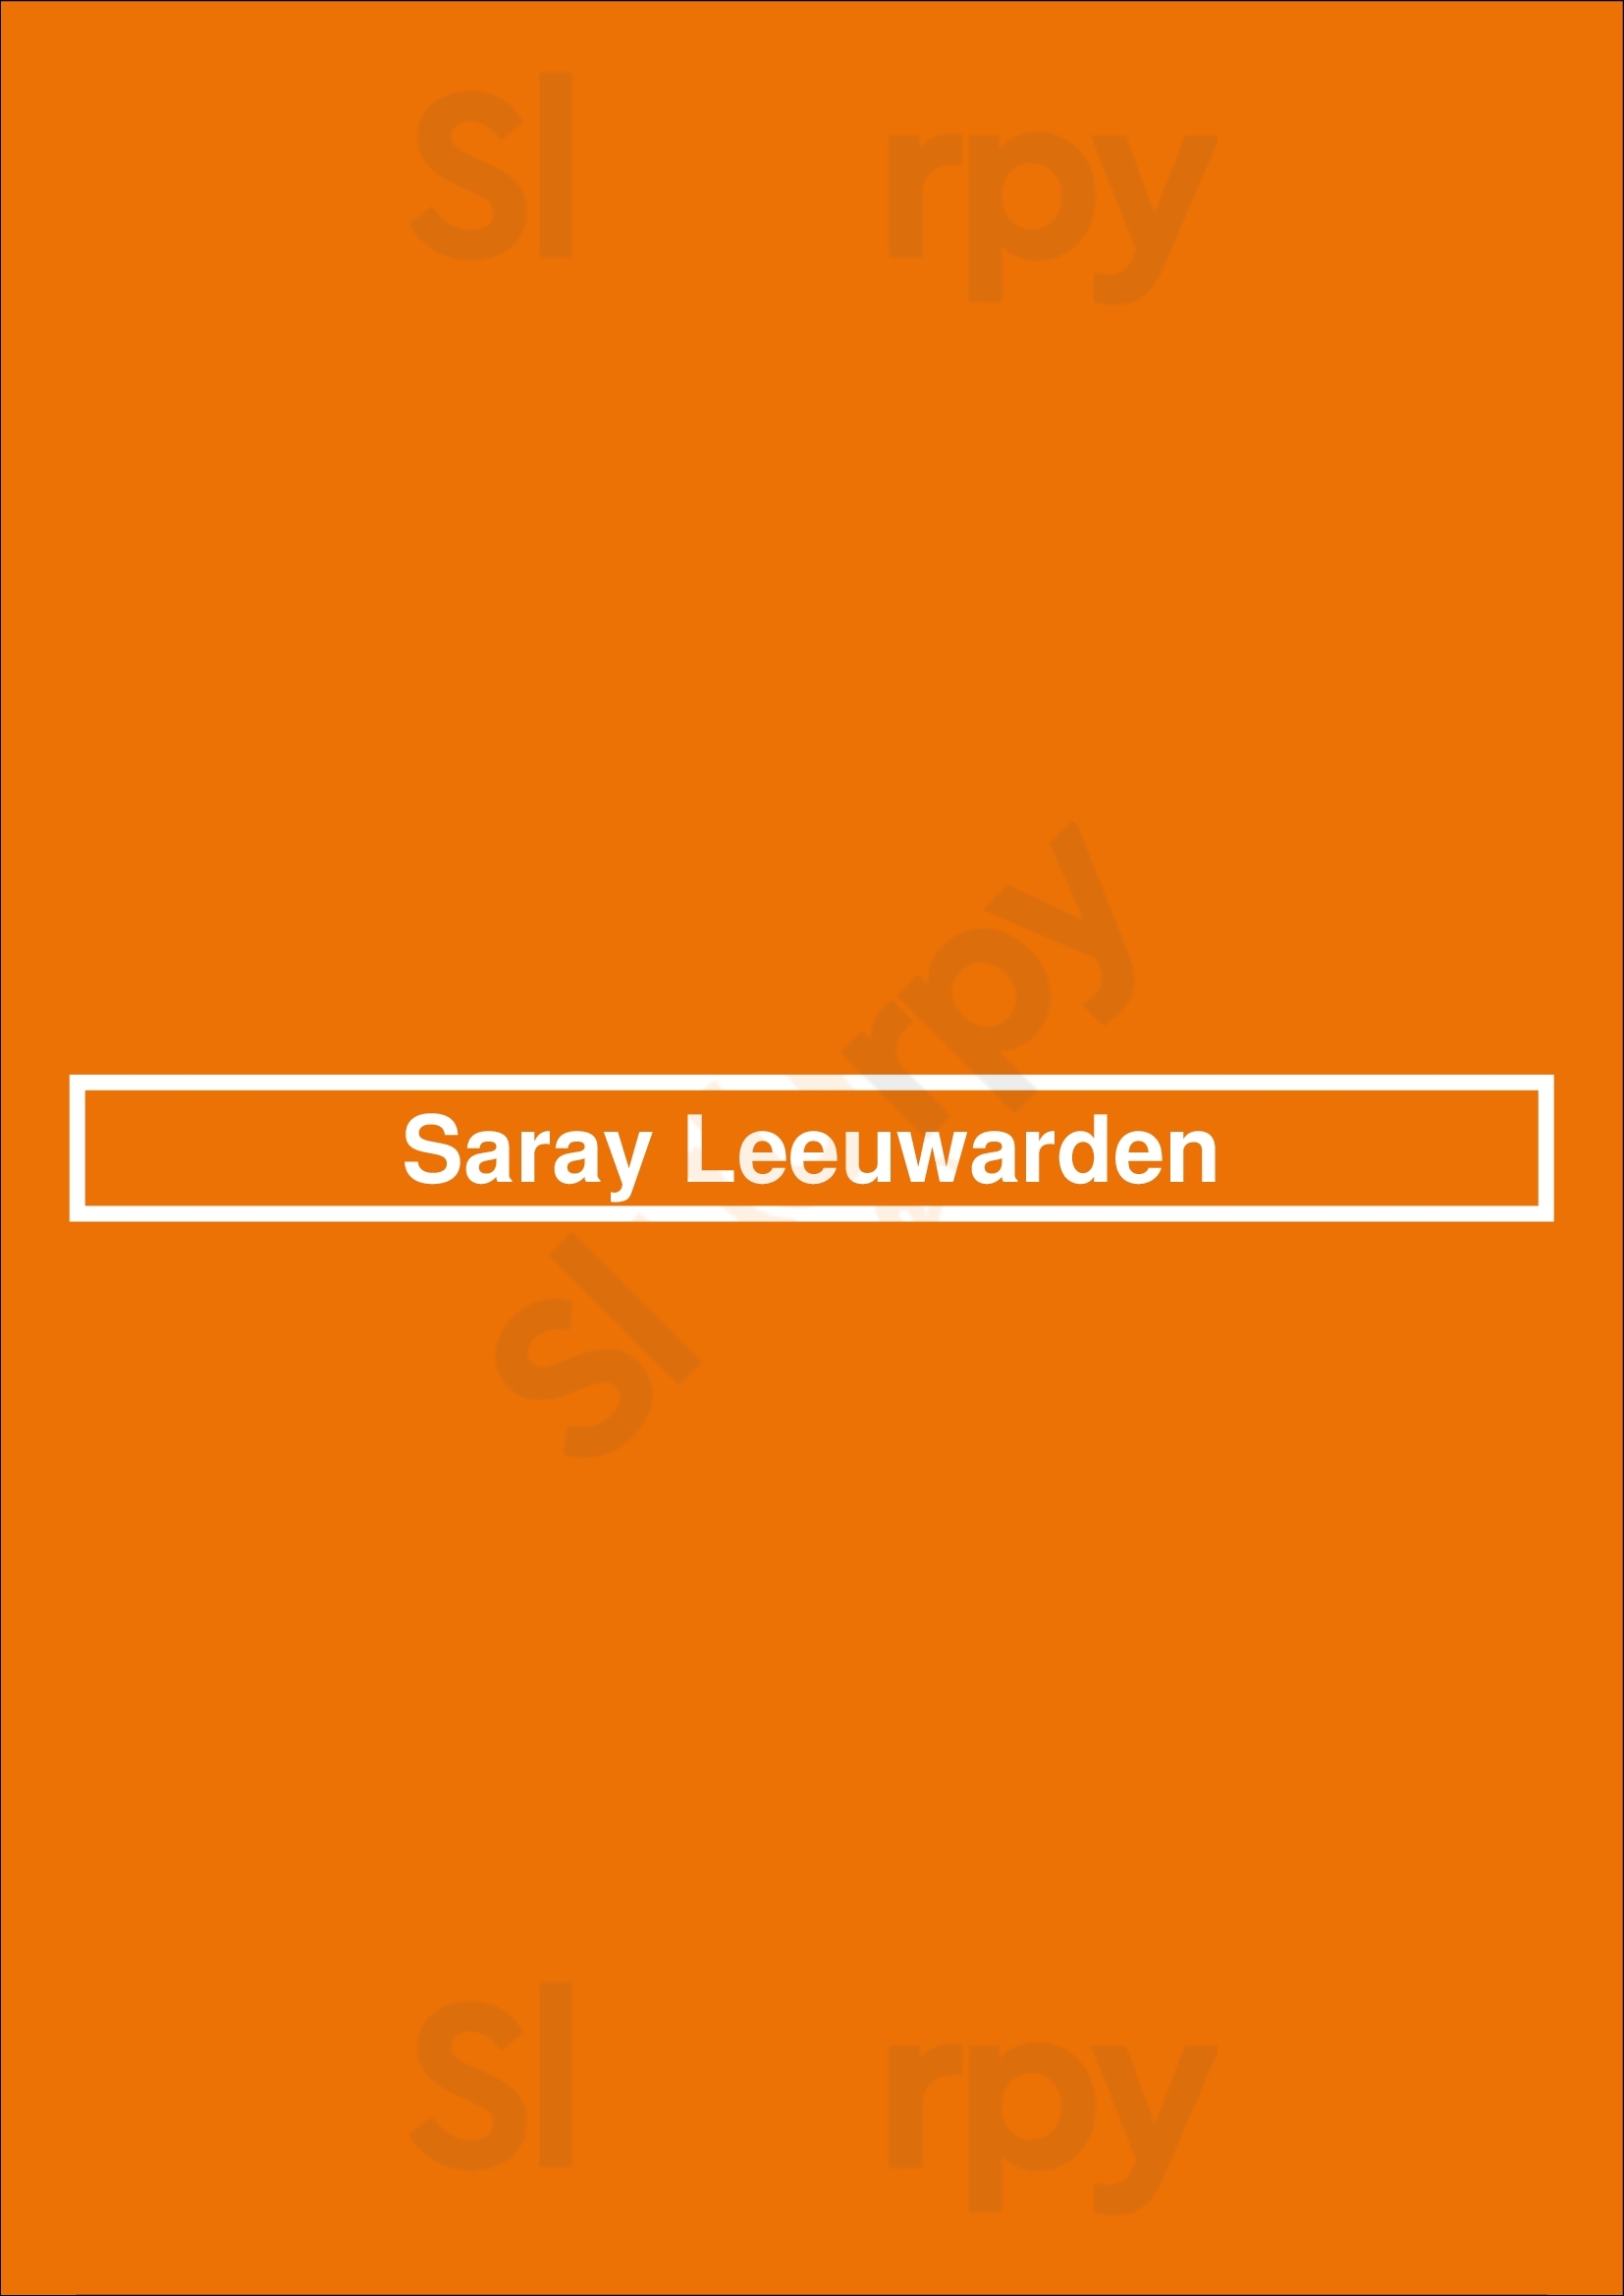 Saray Leeuwarden Leeuwarden Menu - 1